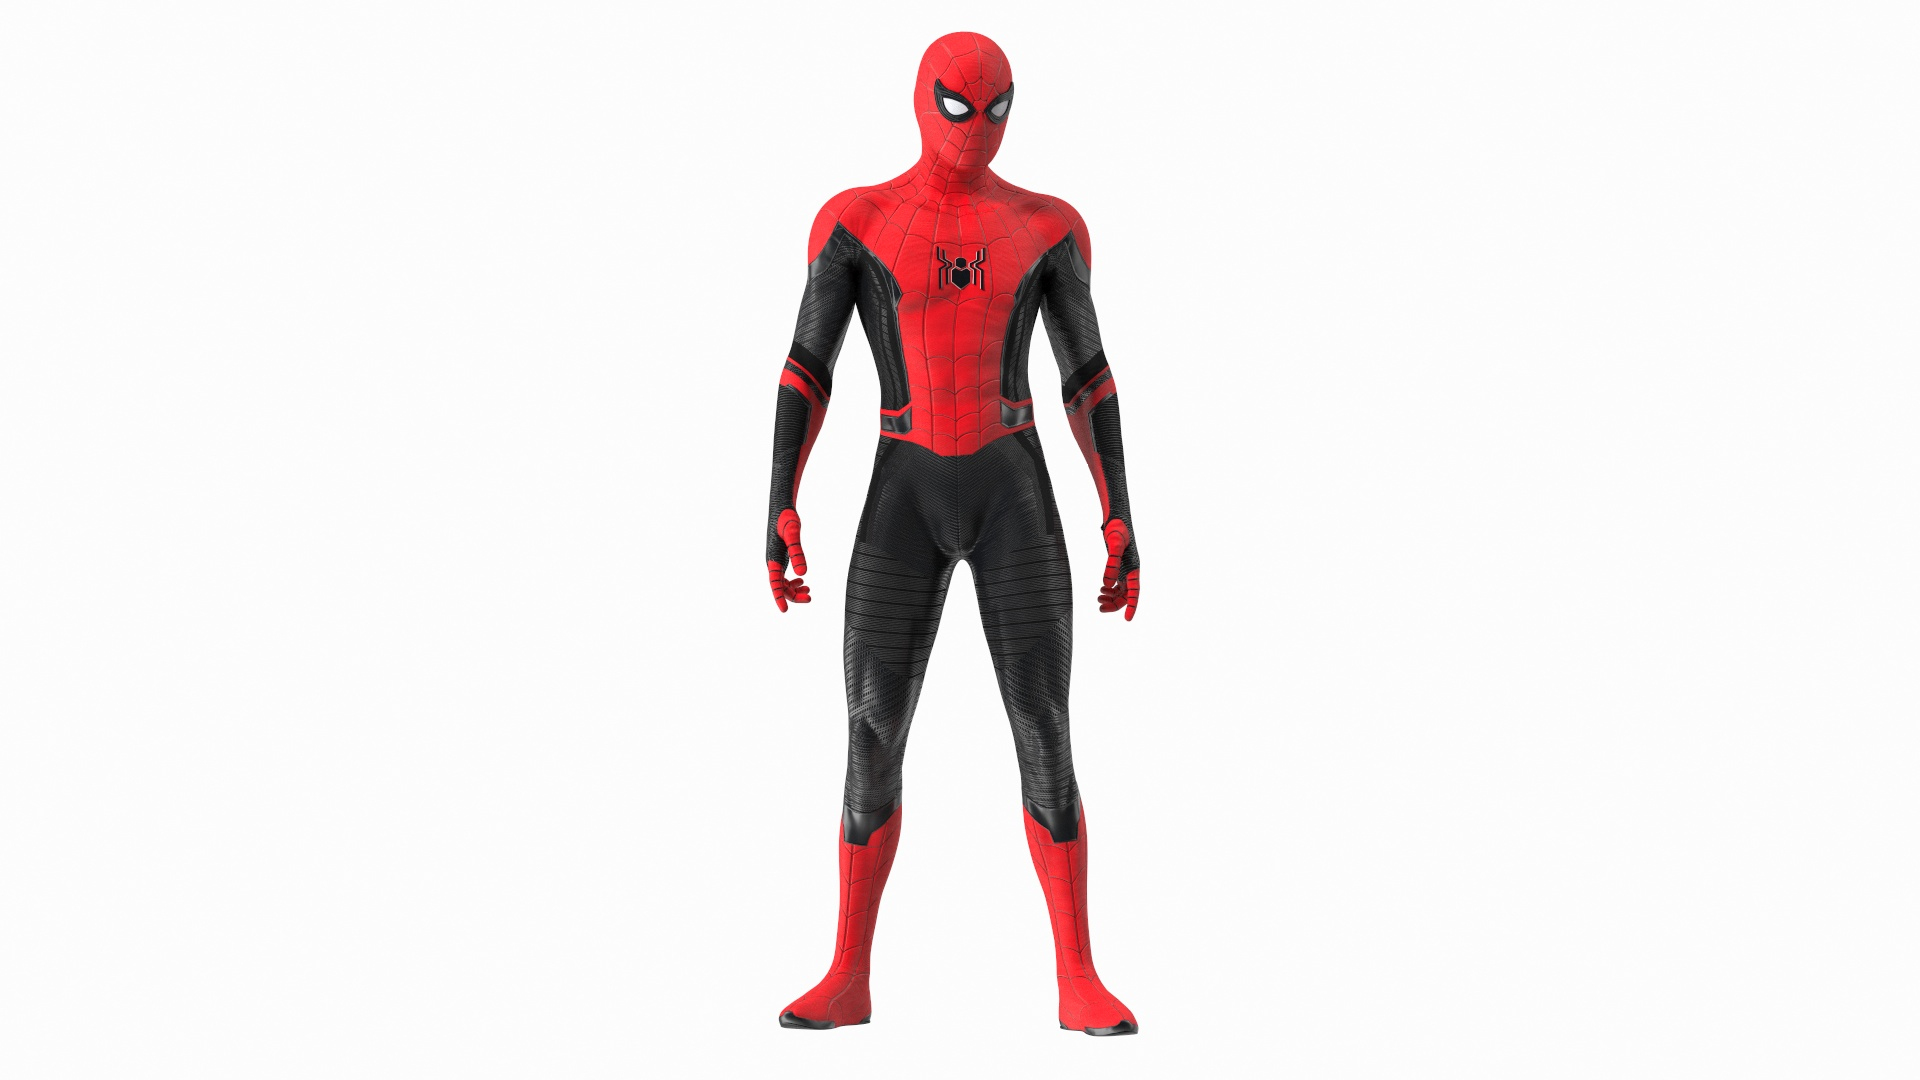 Spiderman standing pose